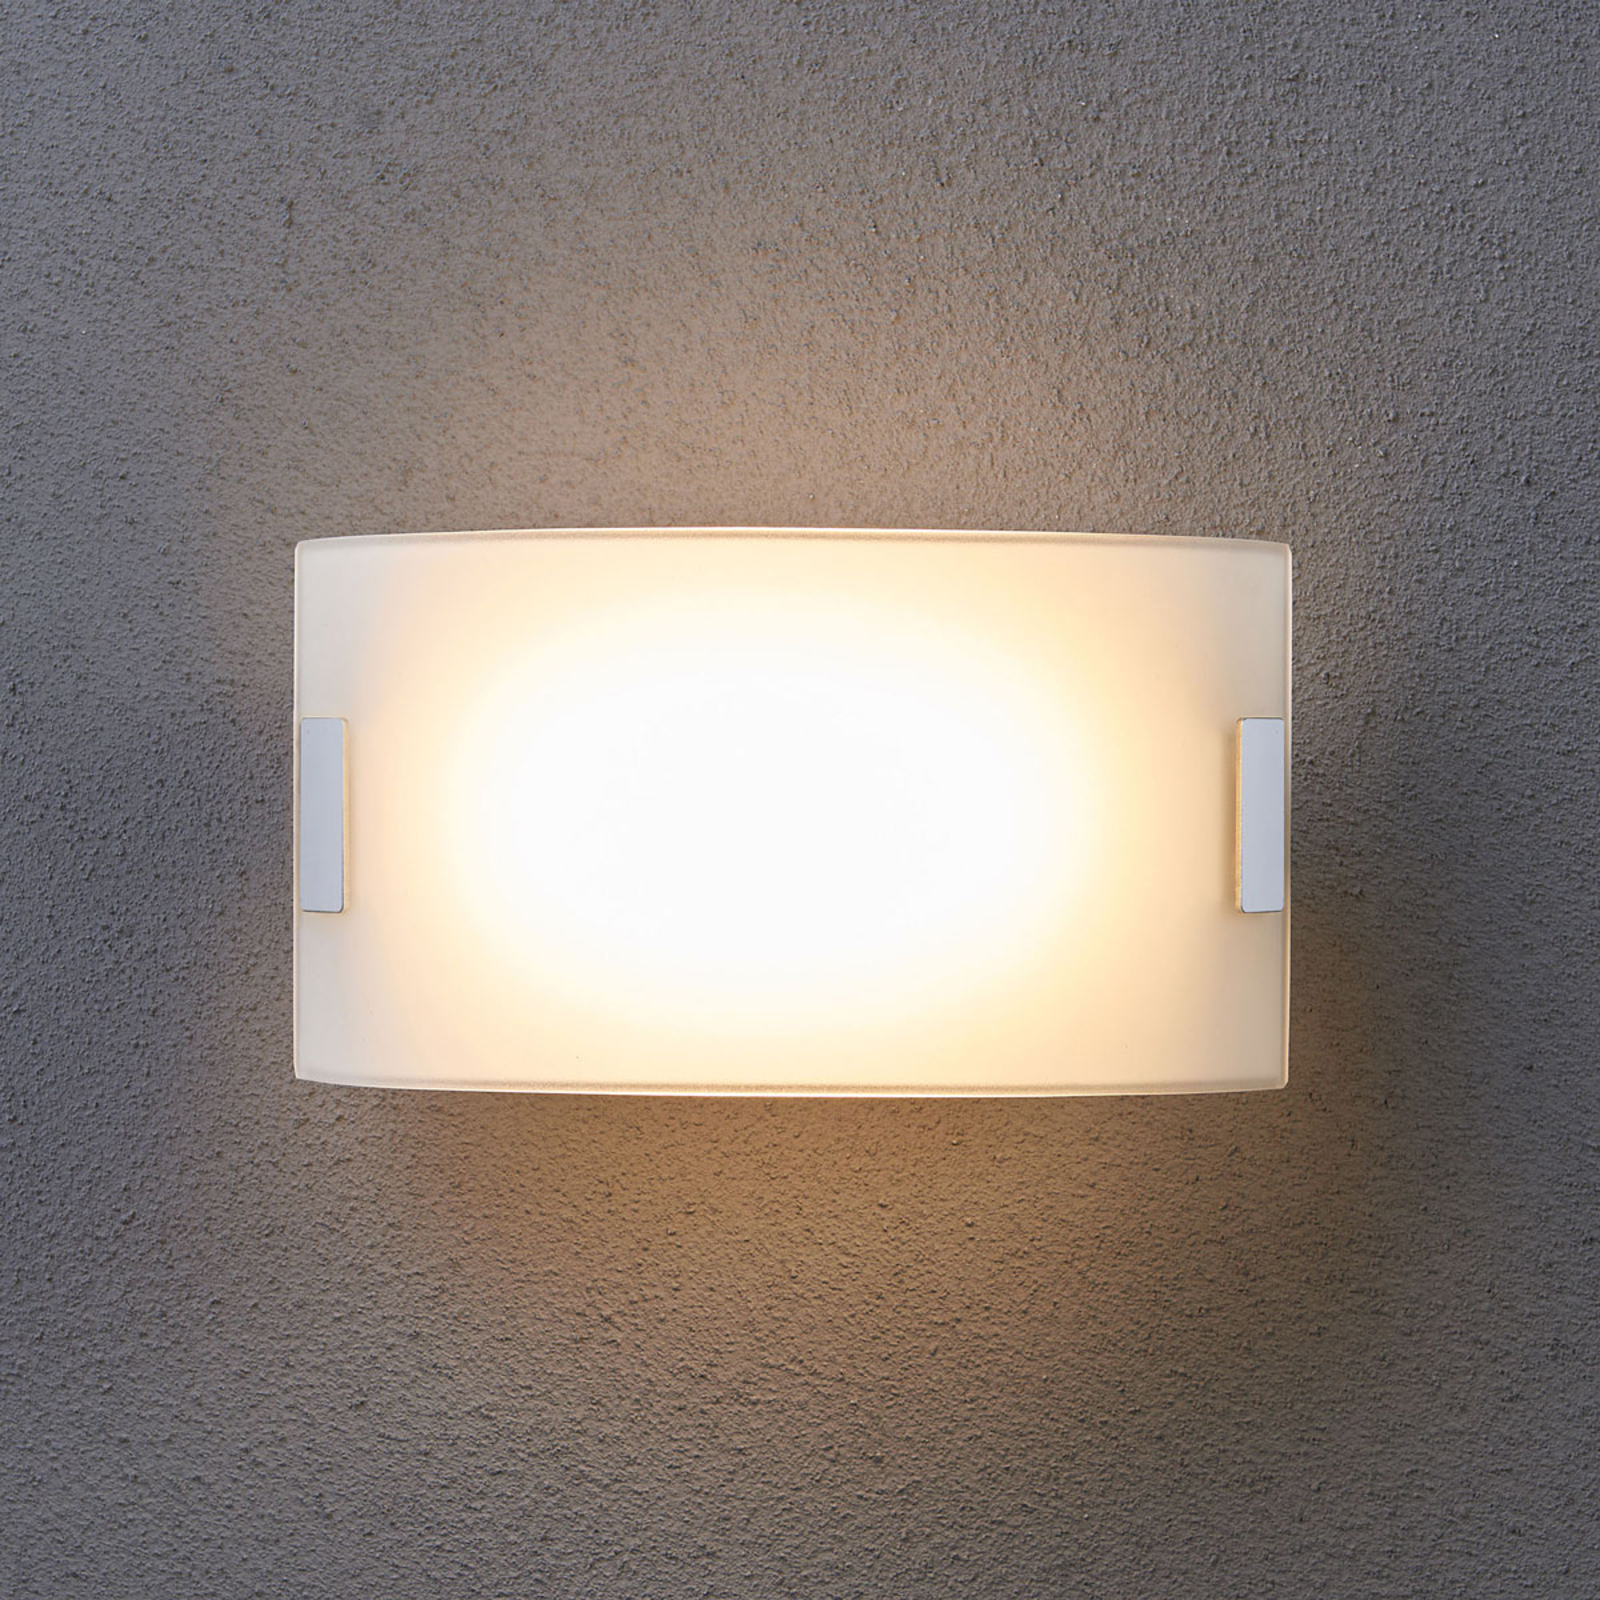 Biała, szklana lampa ścienna LED Gisela